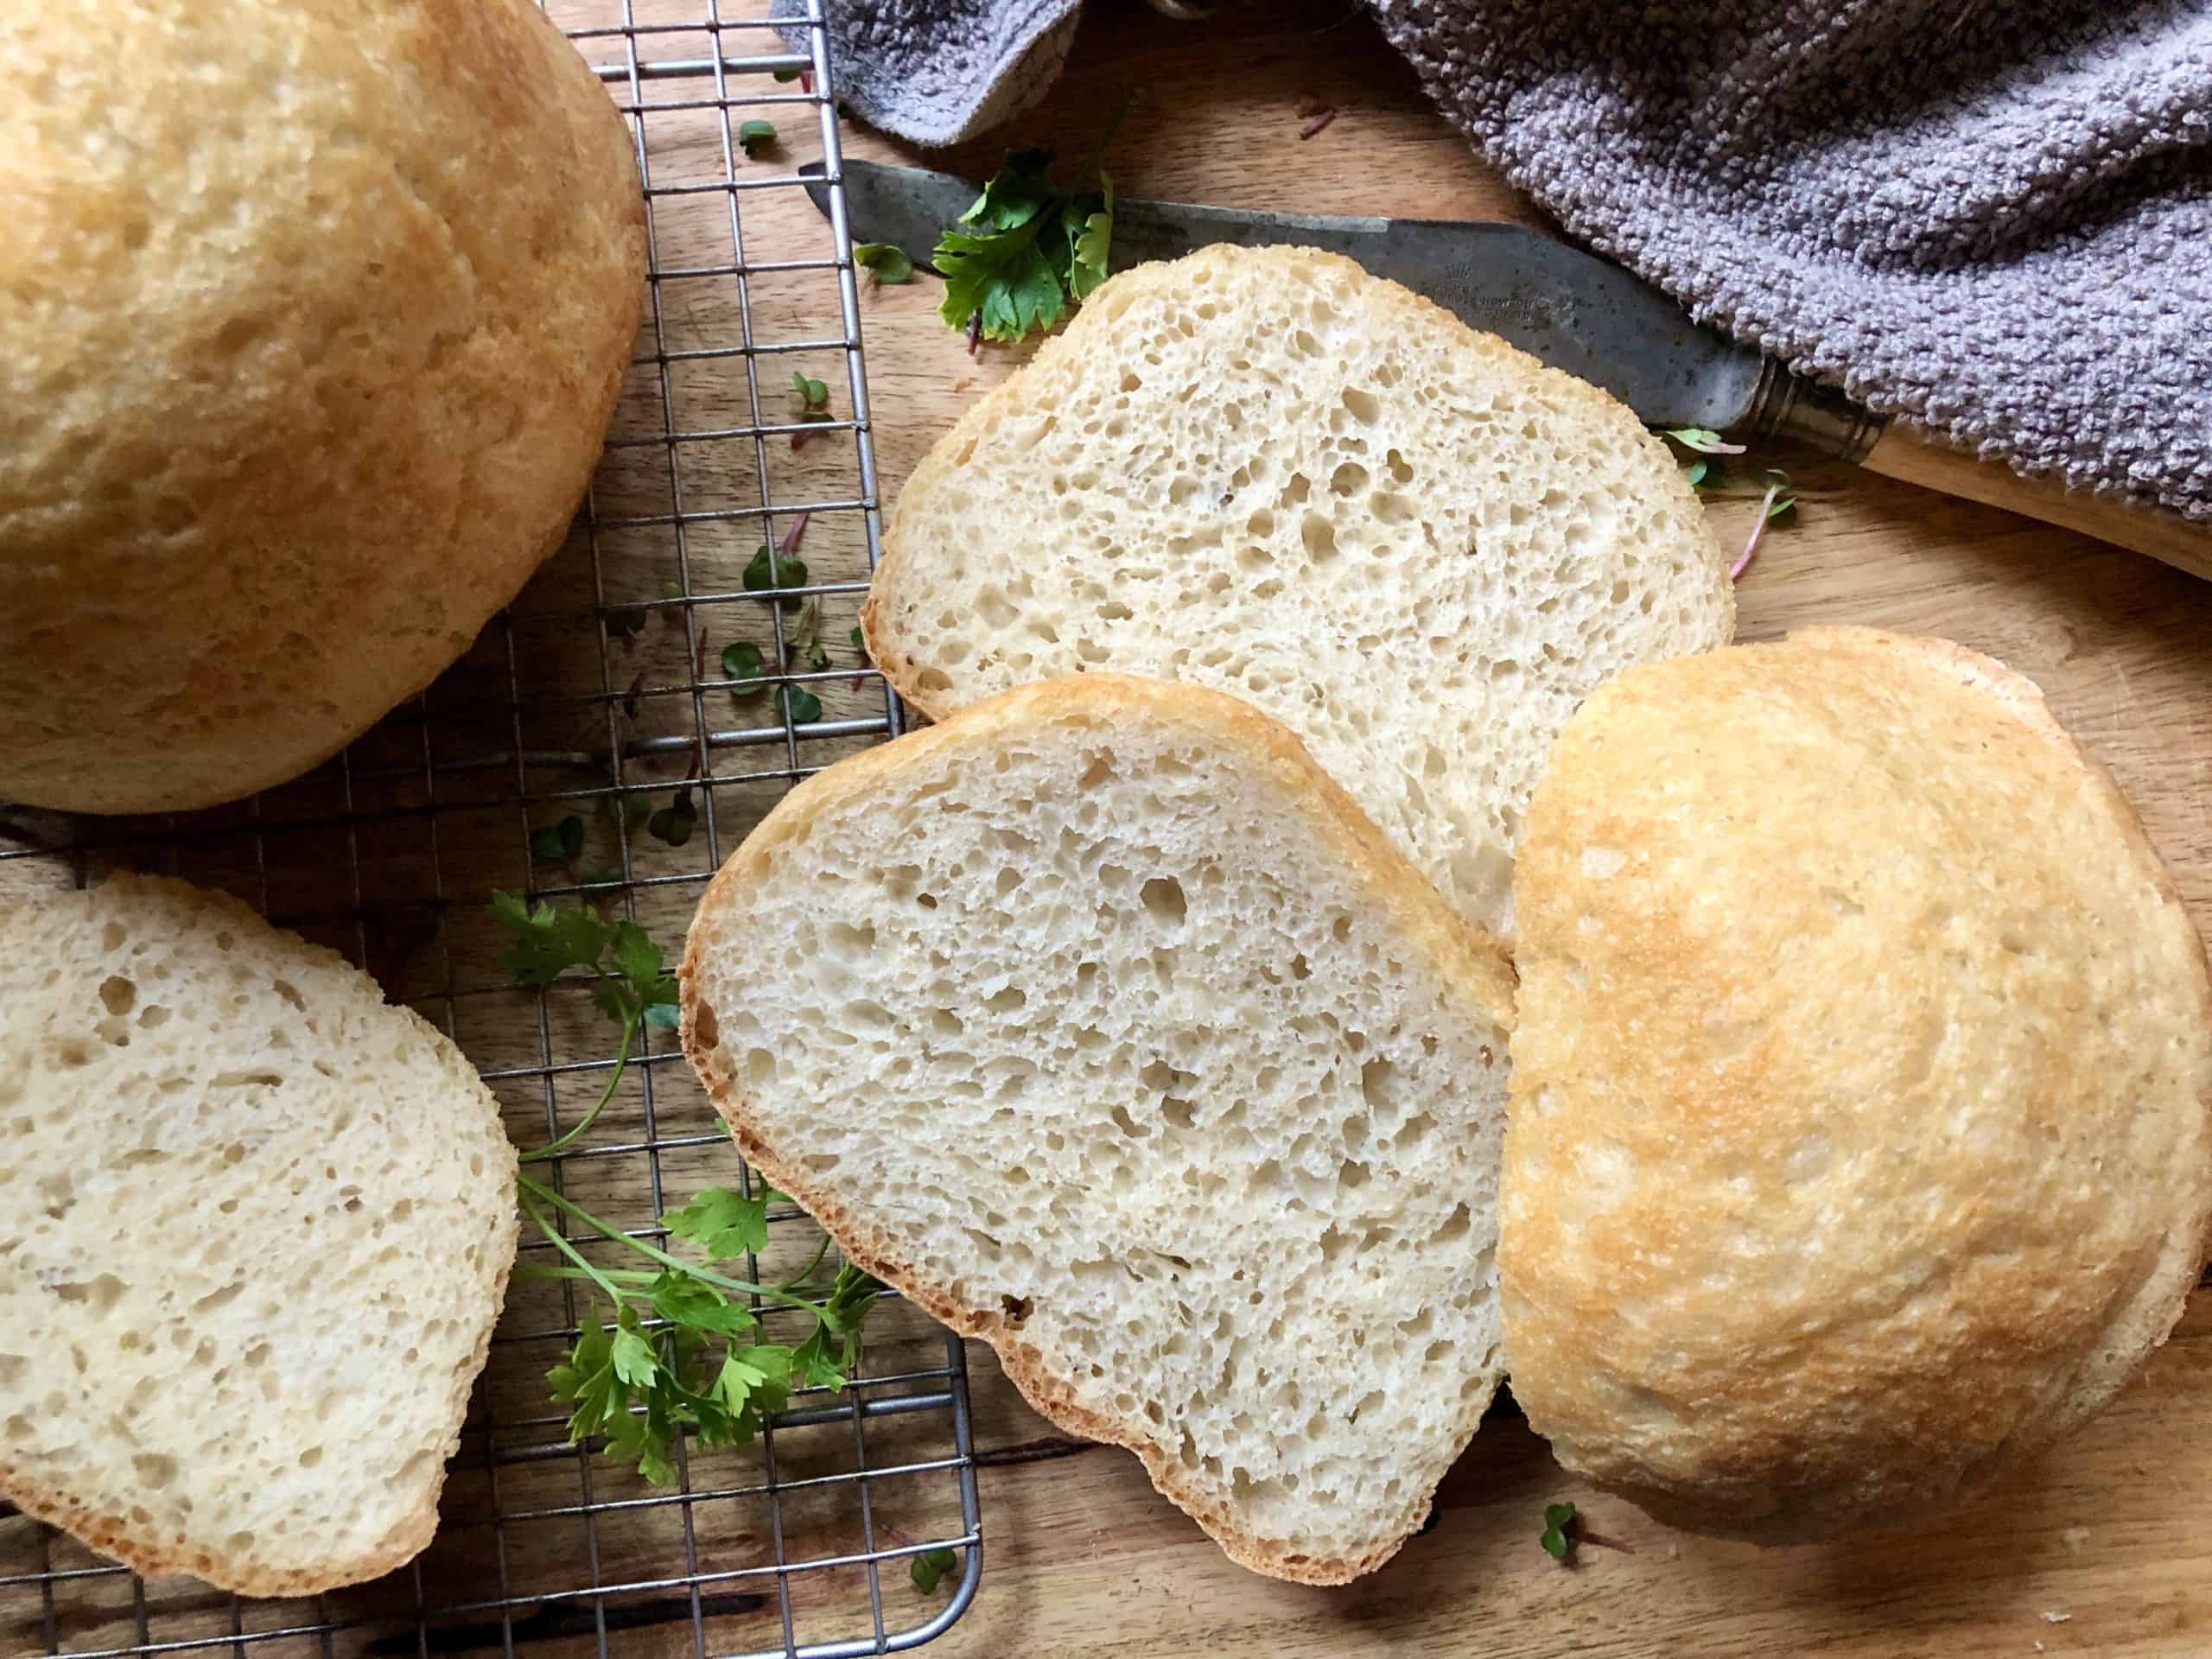 No-Knead Rosemary Bread - Savor the Best